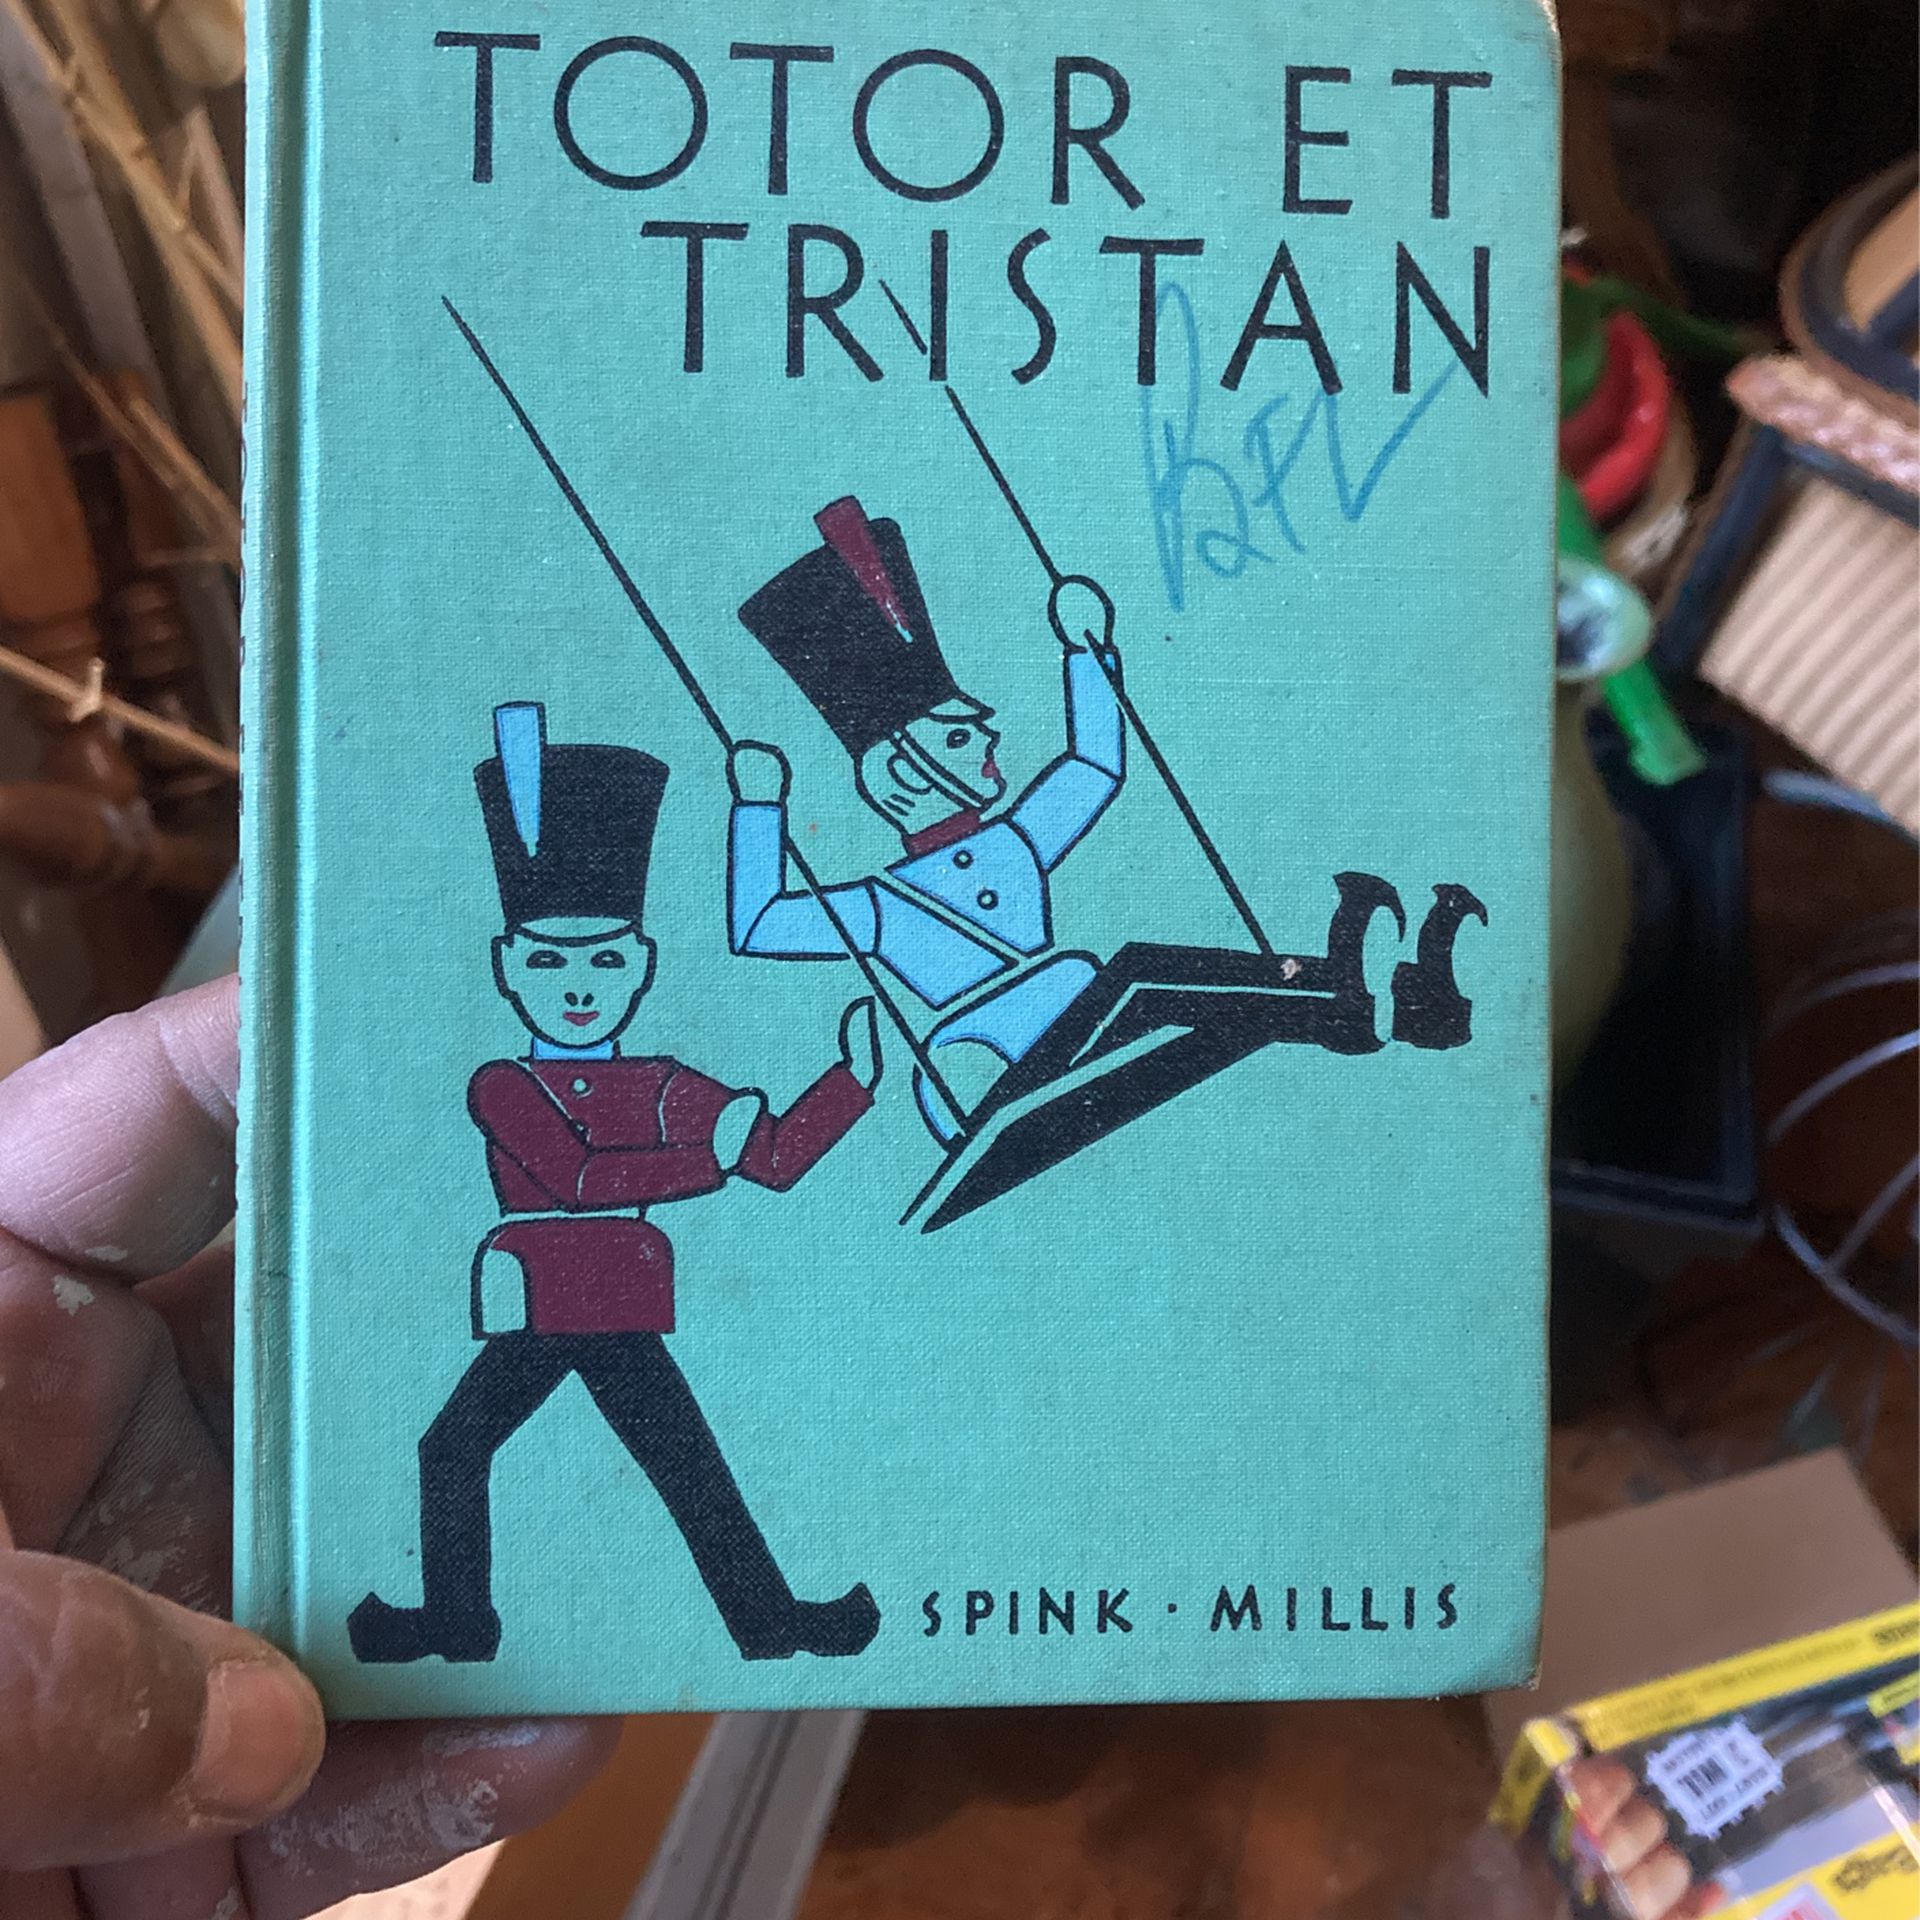 Rotor Et Tristan